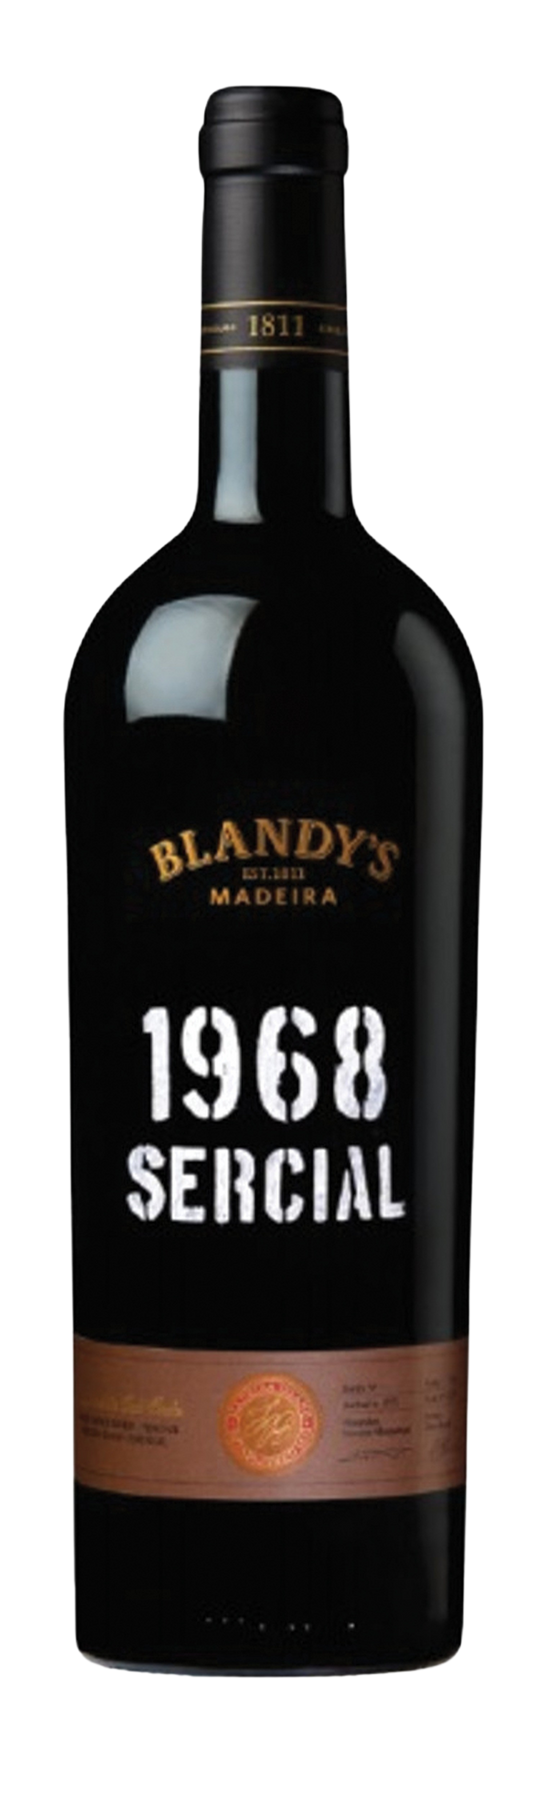 Blandy's Sercial Vintage 20% 75cl Madeira